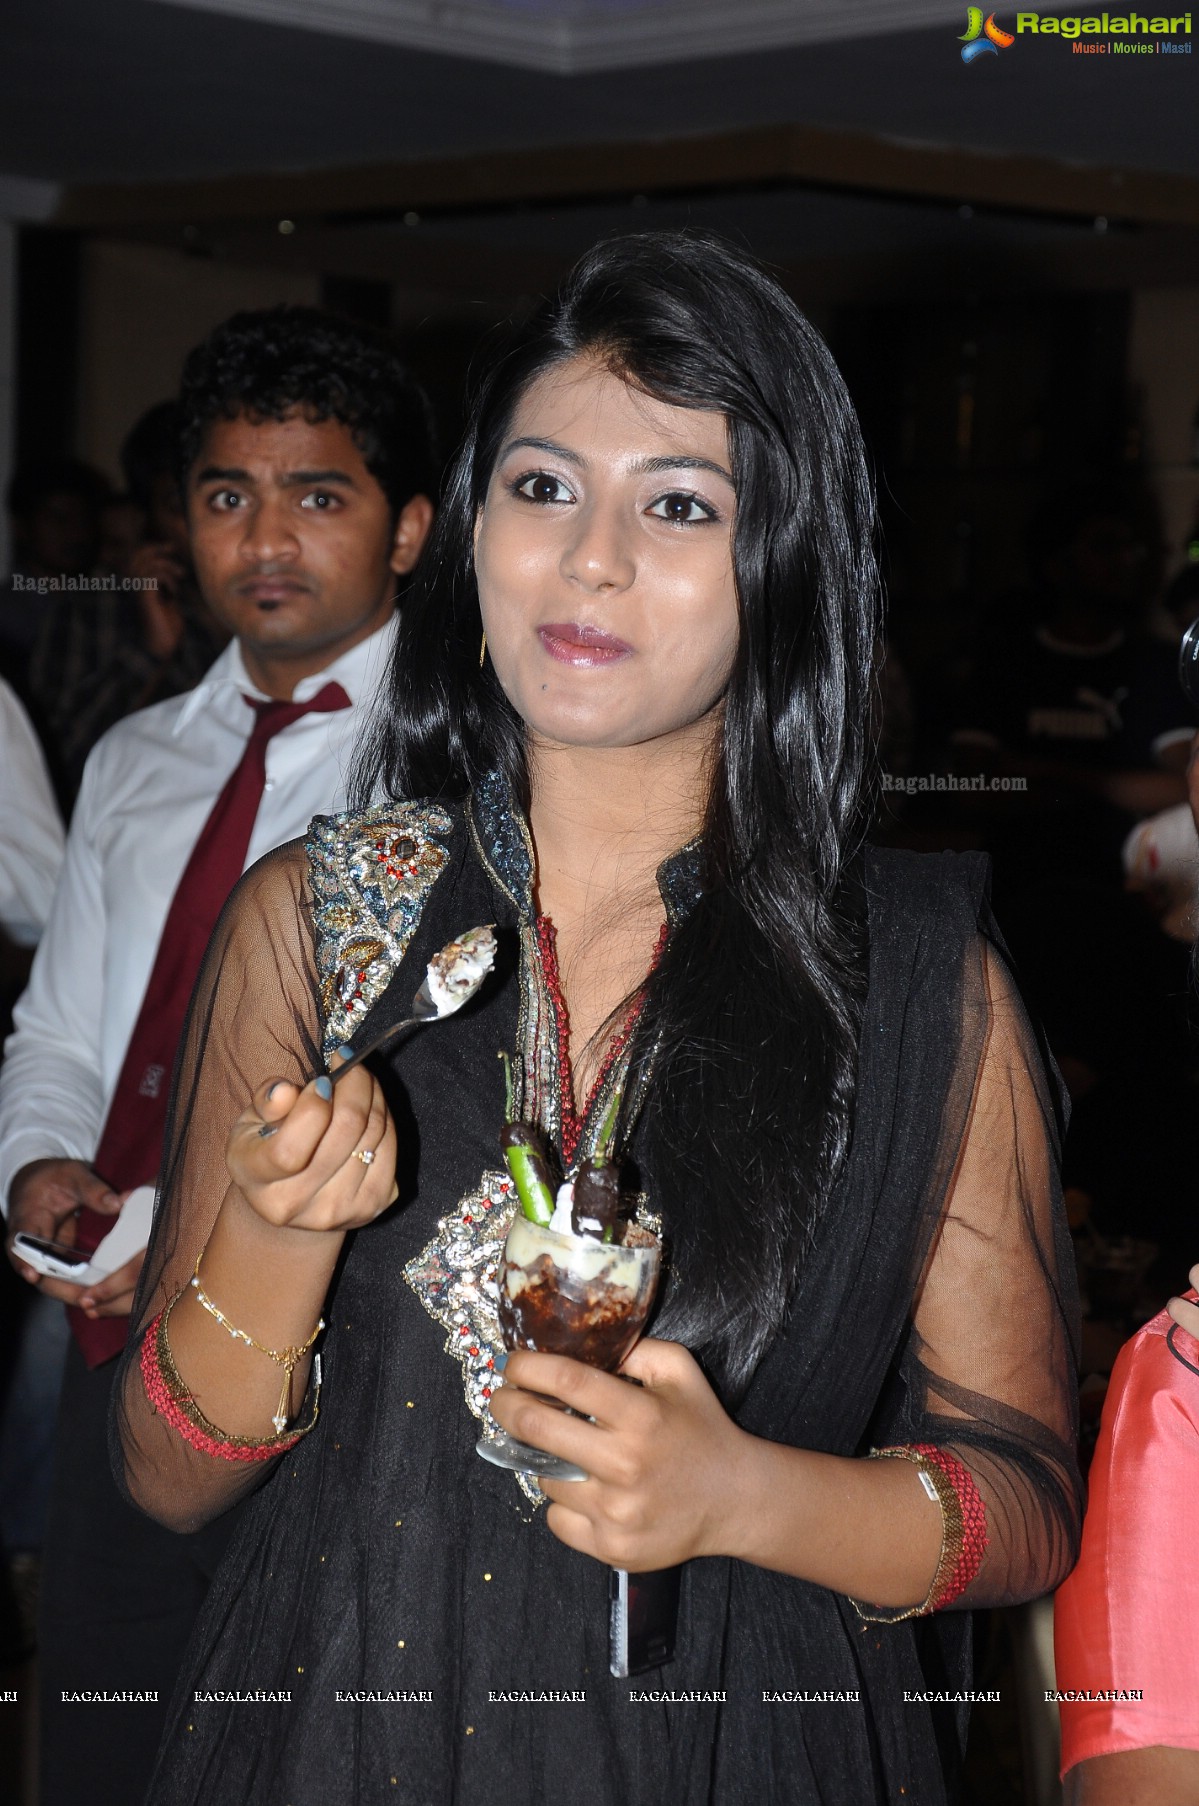 The Kitchen Queen of Hyderabad 2013